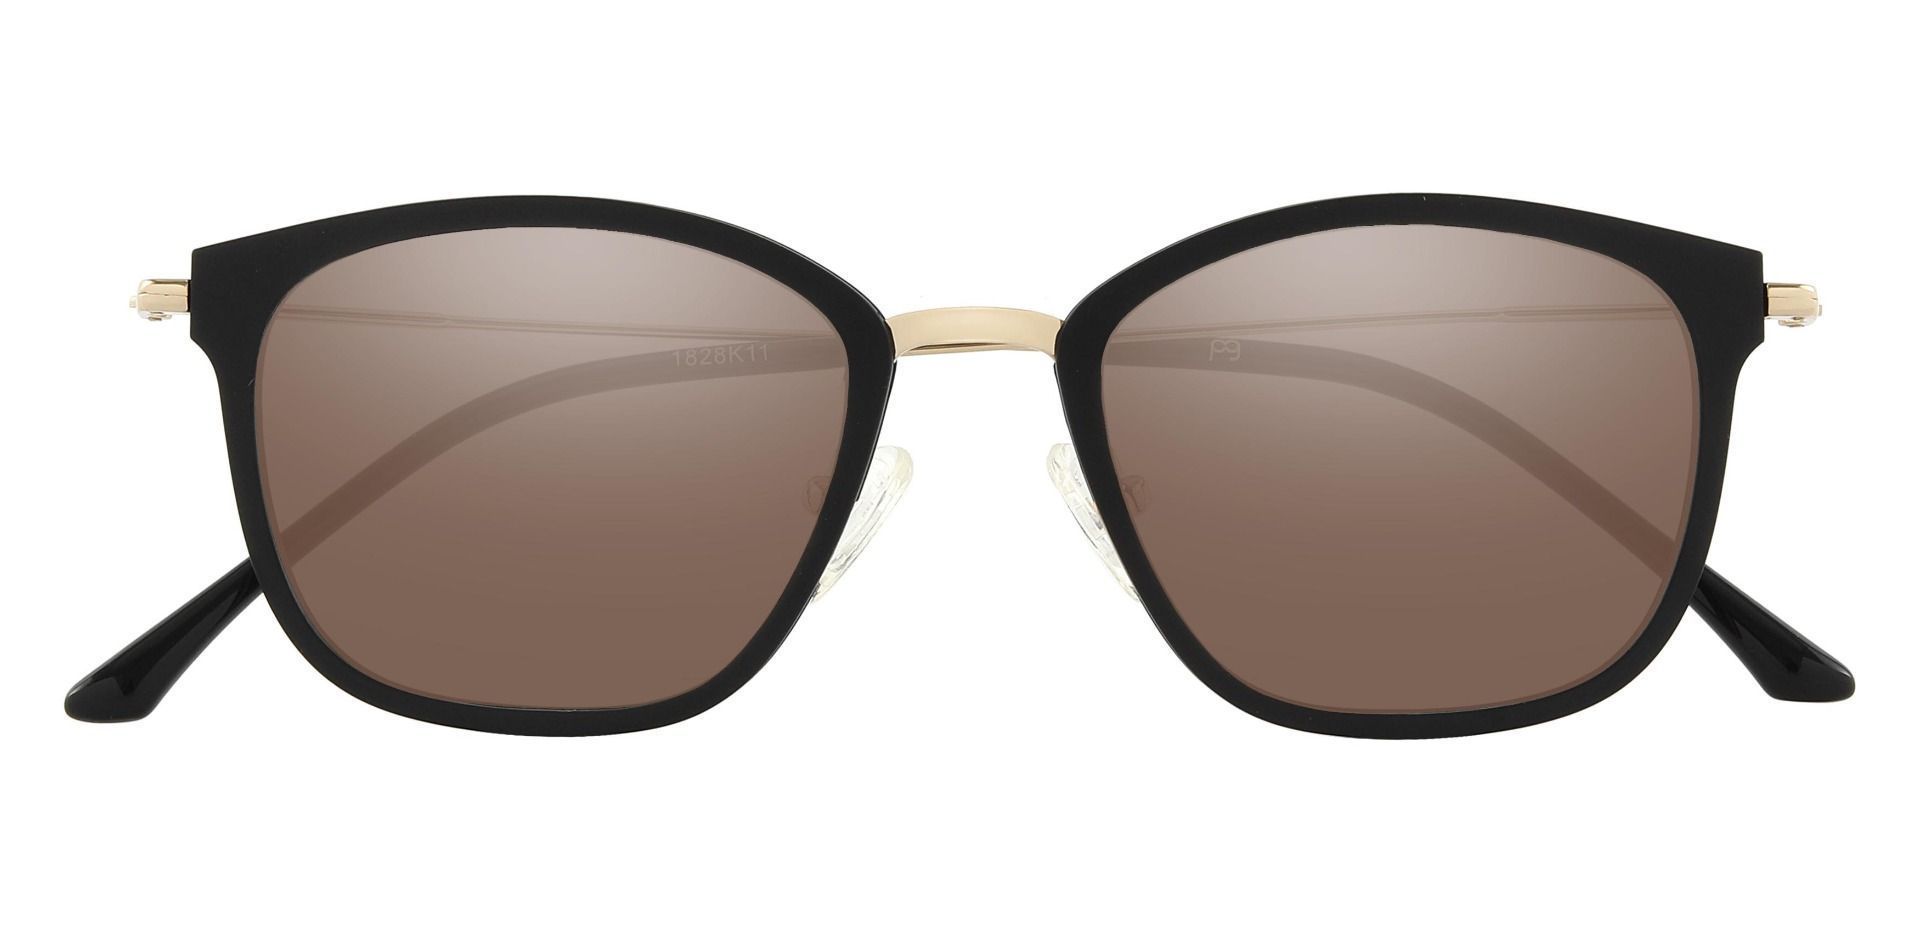 Brooklyn Square Prescription Sunglasses - Black Frame With Brown Lenses